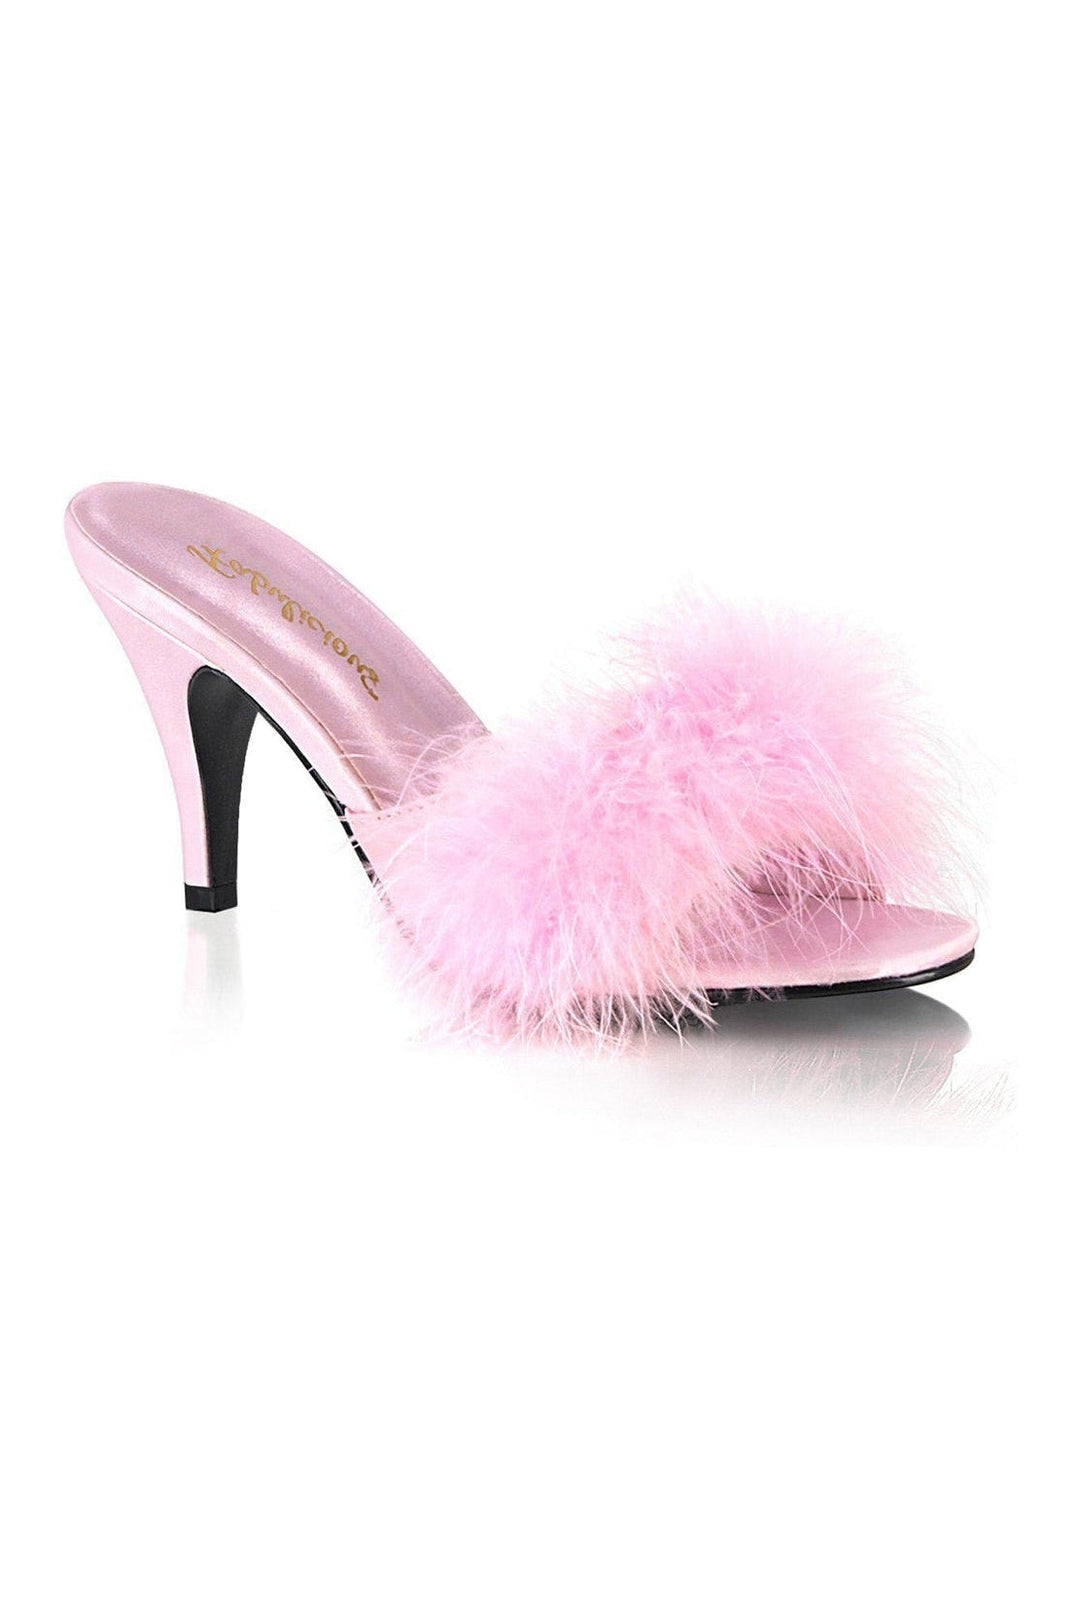 AMOUR-03 Slide | Pink Genuine Satin-Slides-Fabulicious-Pink-7-Genuine Satin-SEXYSHOES.COM